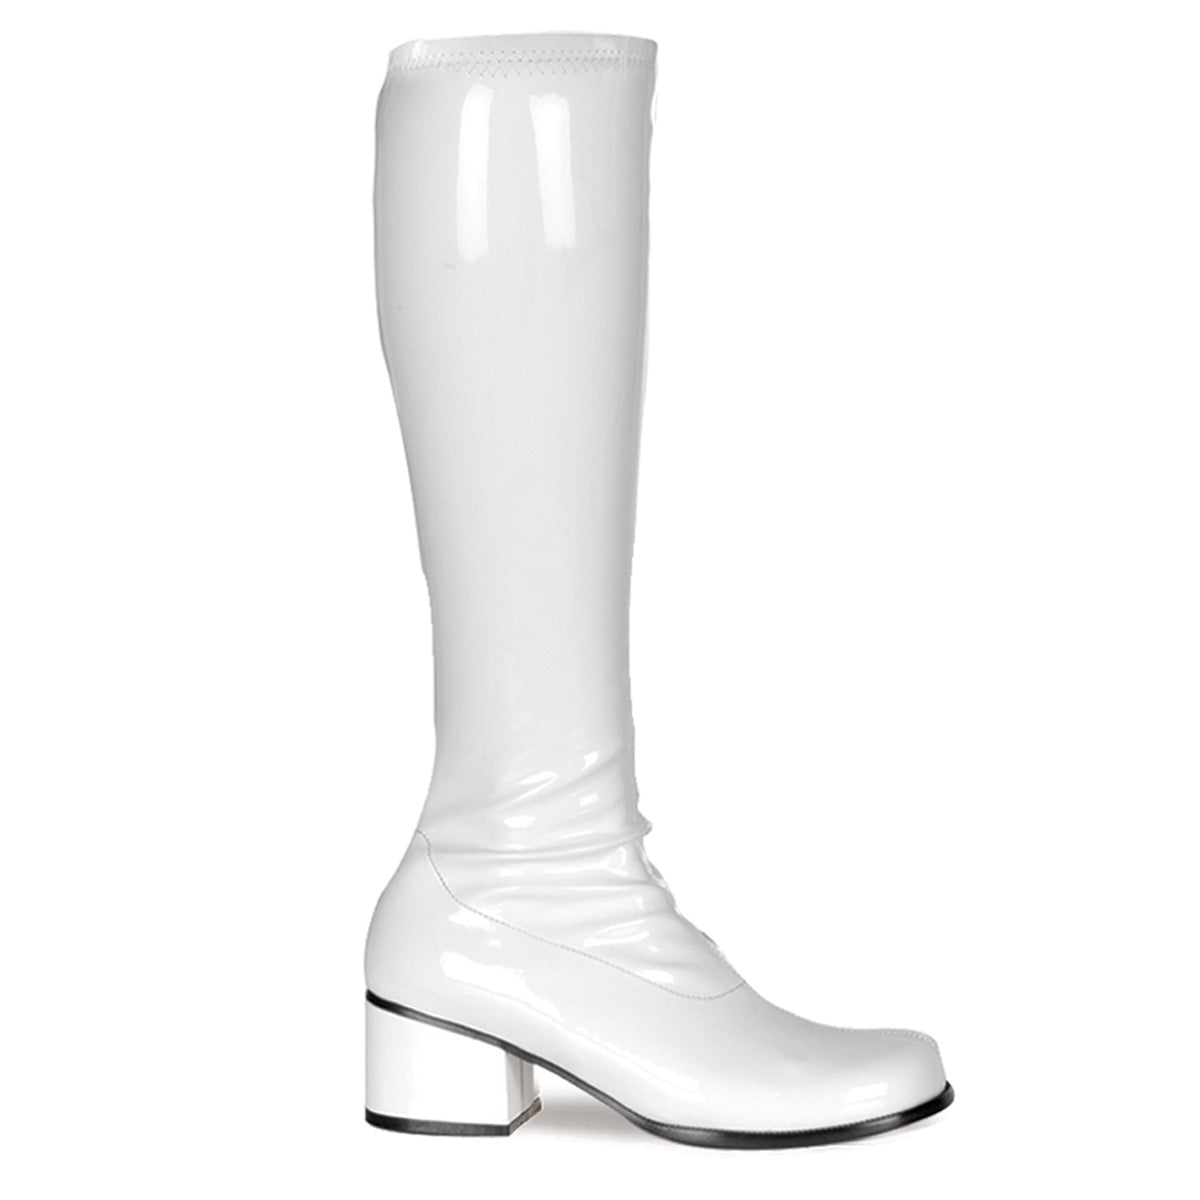 RETRO-300 Pleasers Funtasma 2 Inch Heel White Patent Women's Boots